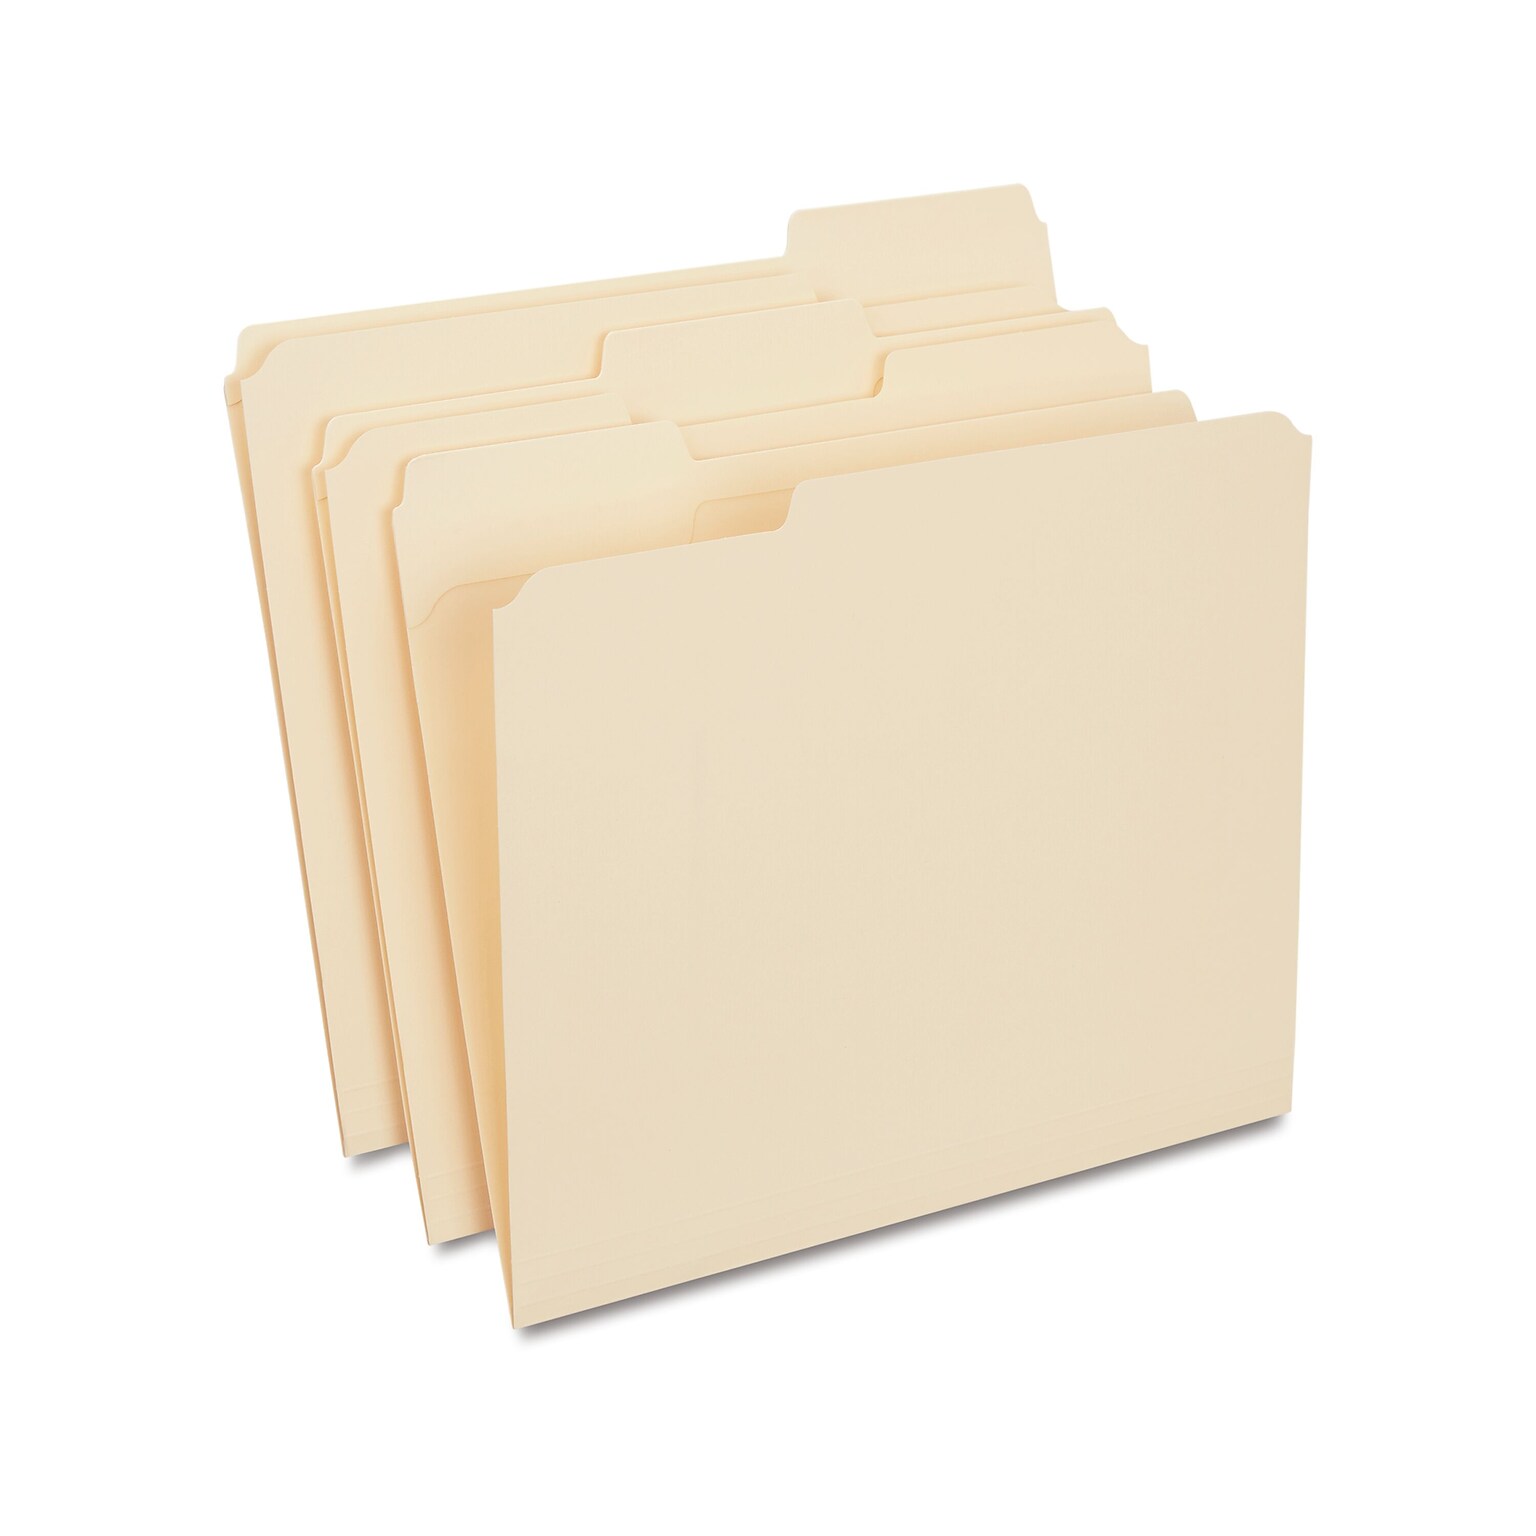 Quill Brand® Heavy-Duty Reinforced File Folders, 1/3-Cut, Letter Size, Assorted Tabs, Manila, 50/Box (71043450)